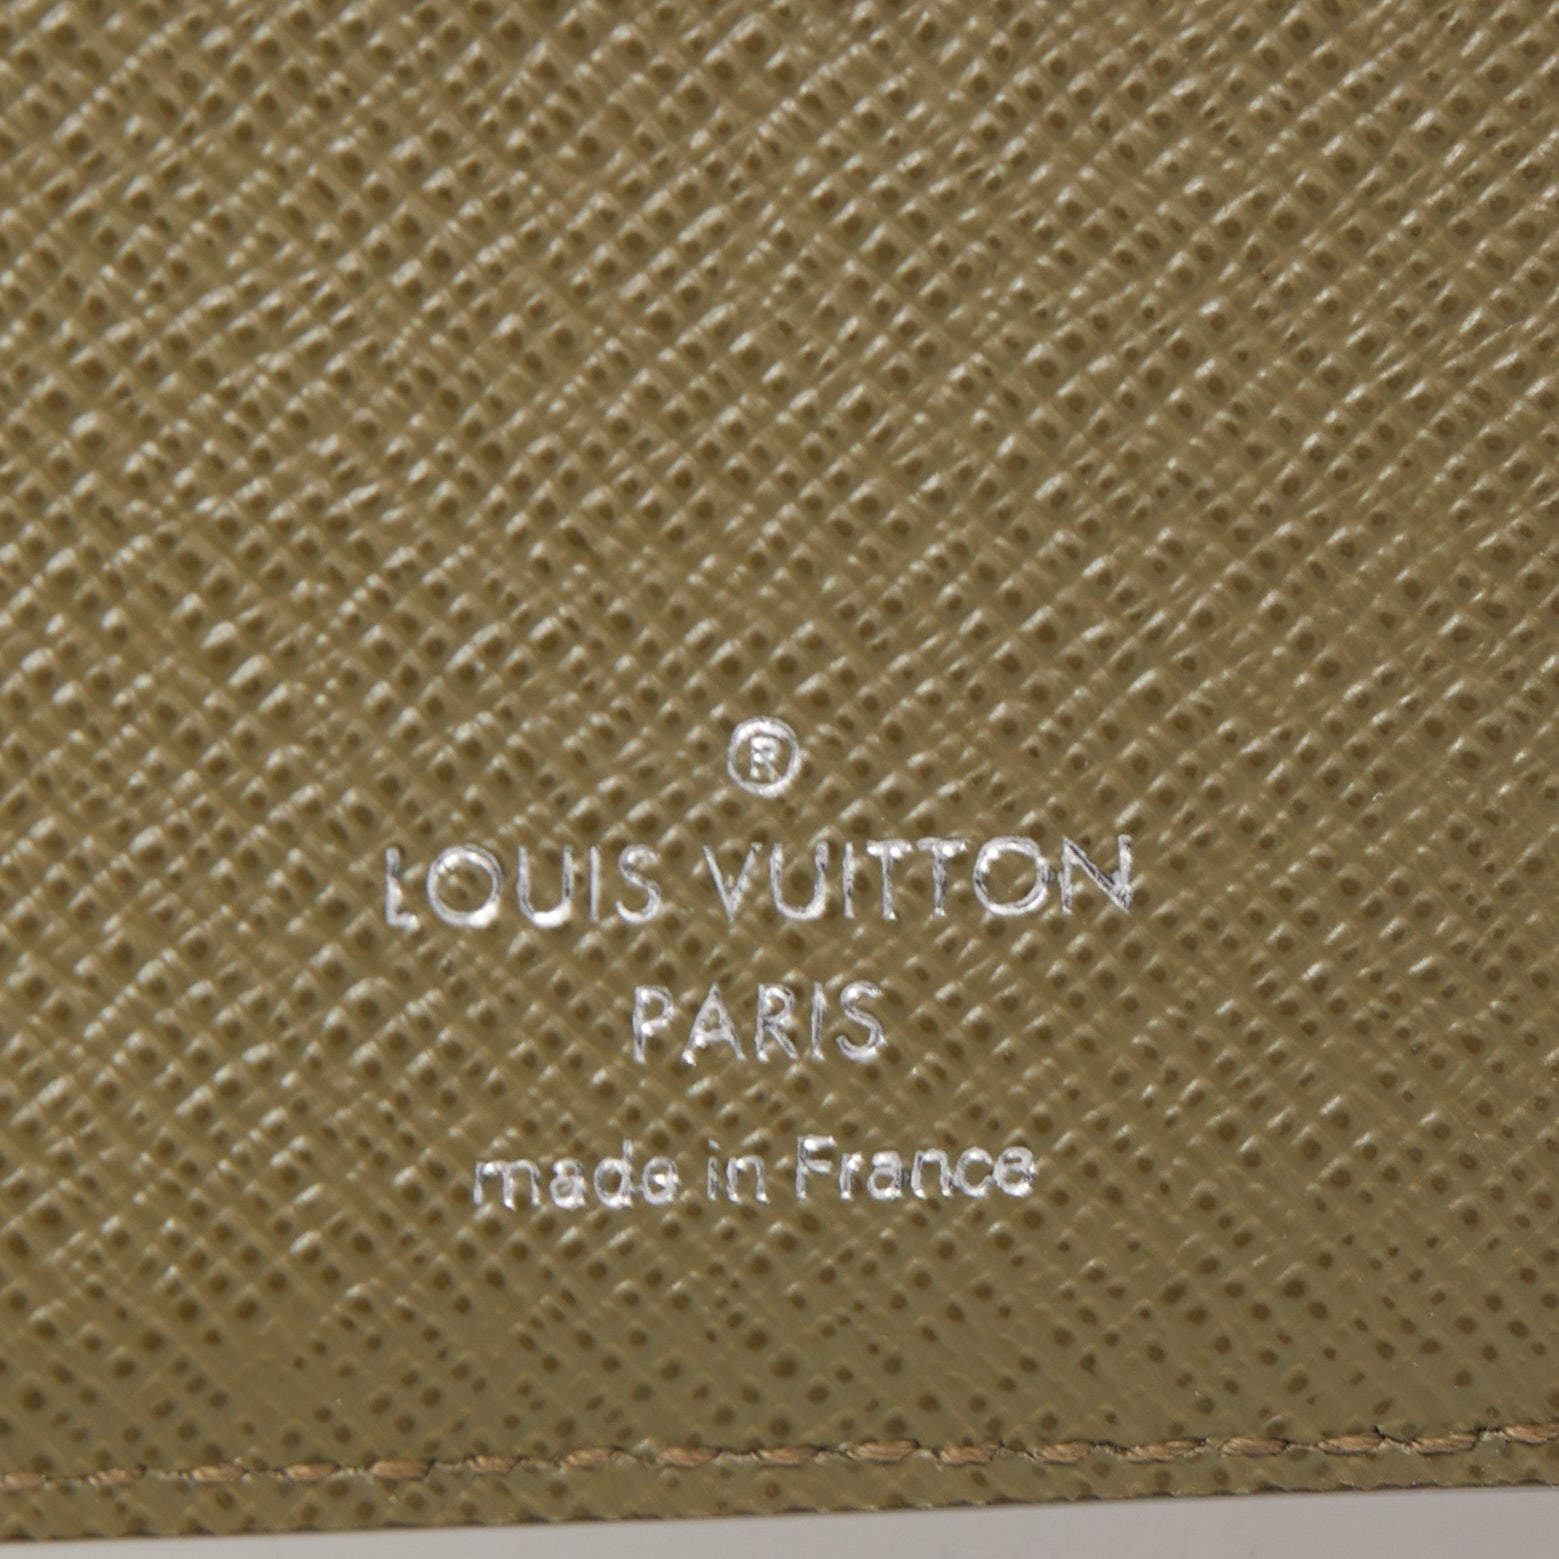 Louis Vuitton Multiple Wallet Miami Green in Monogram Coated